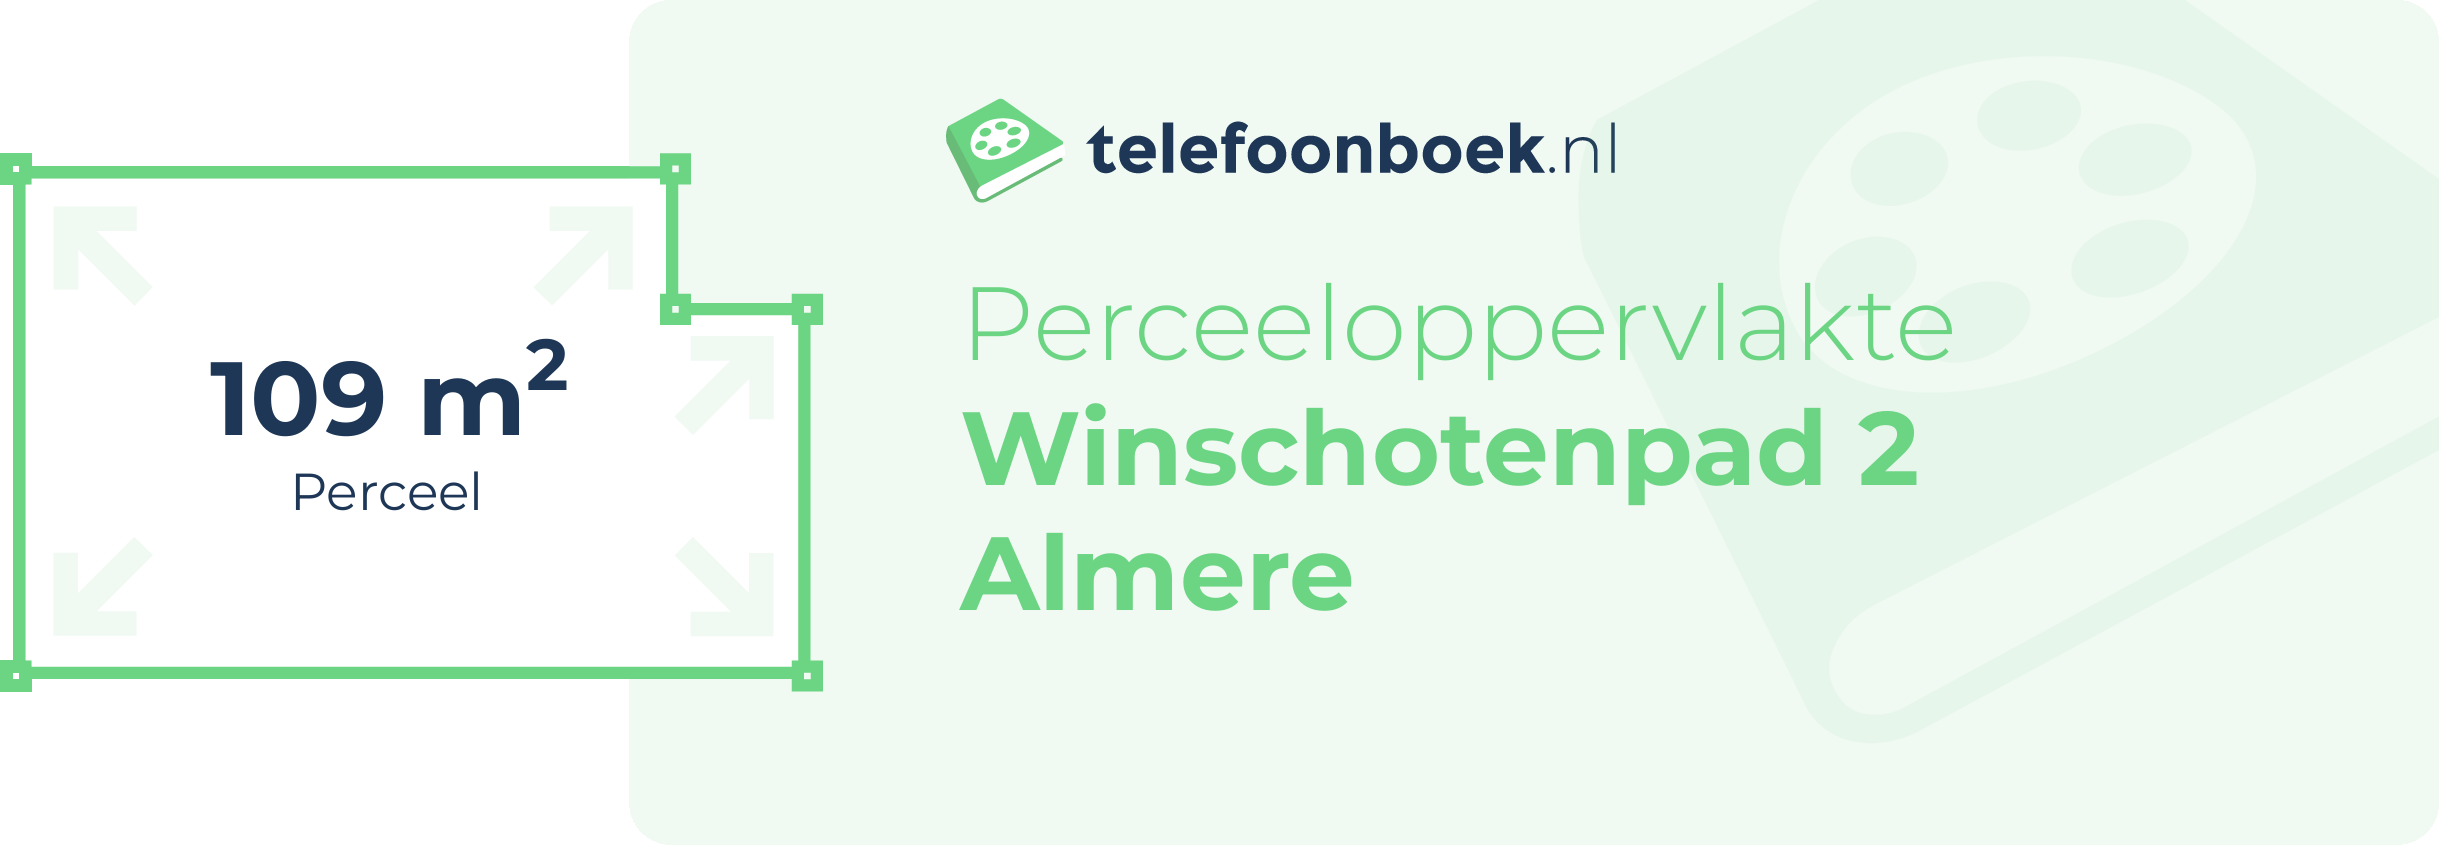 Perceeloppervlakte Winschotenpad 2 Almere